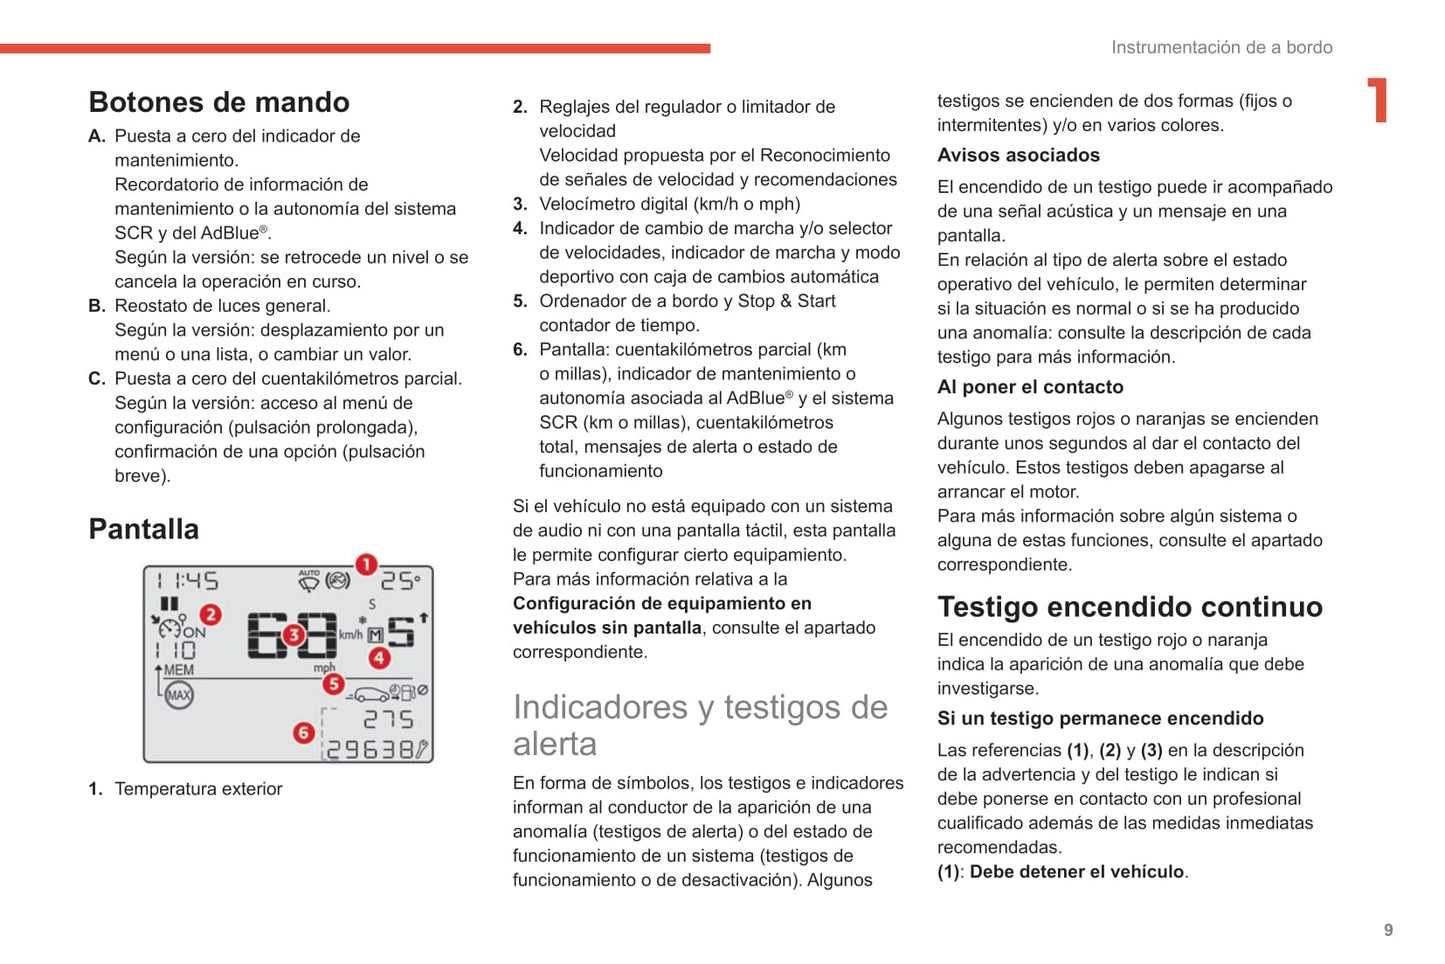 2020 Citroën C3 Gebruikershandleiding | Spaans